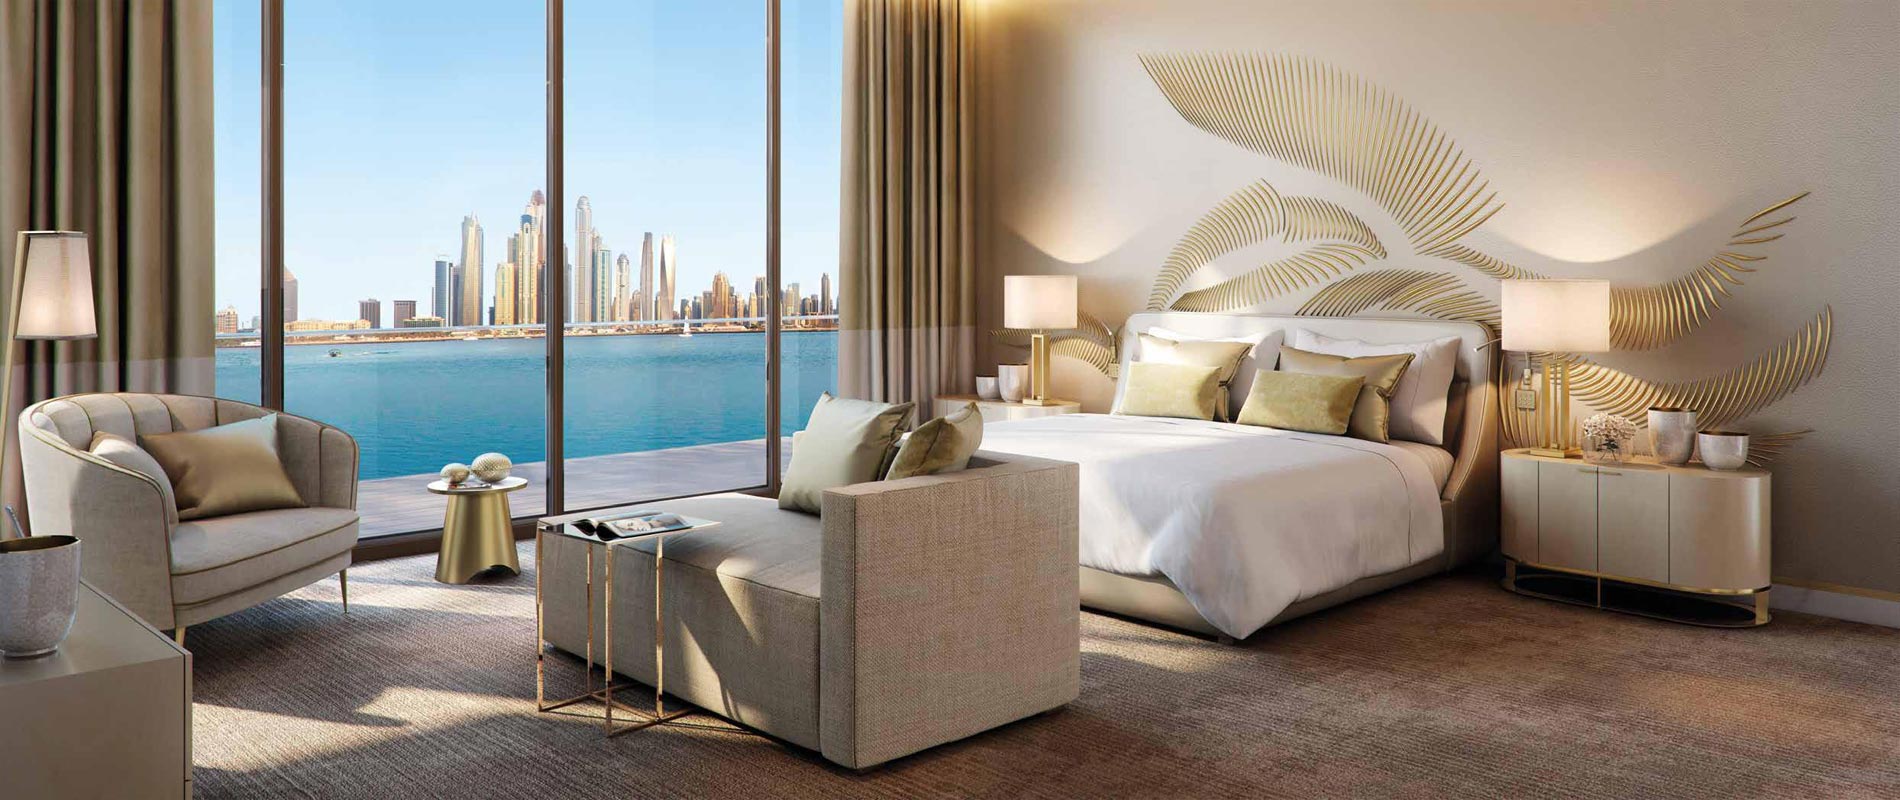 The Royal Atlantis Residences at Palm Jumeirah Dubai.